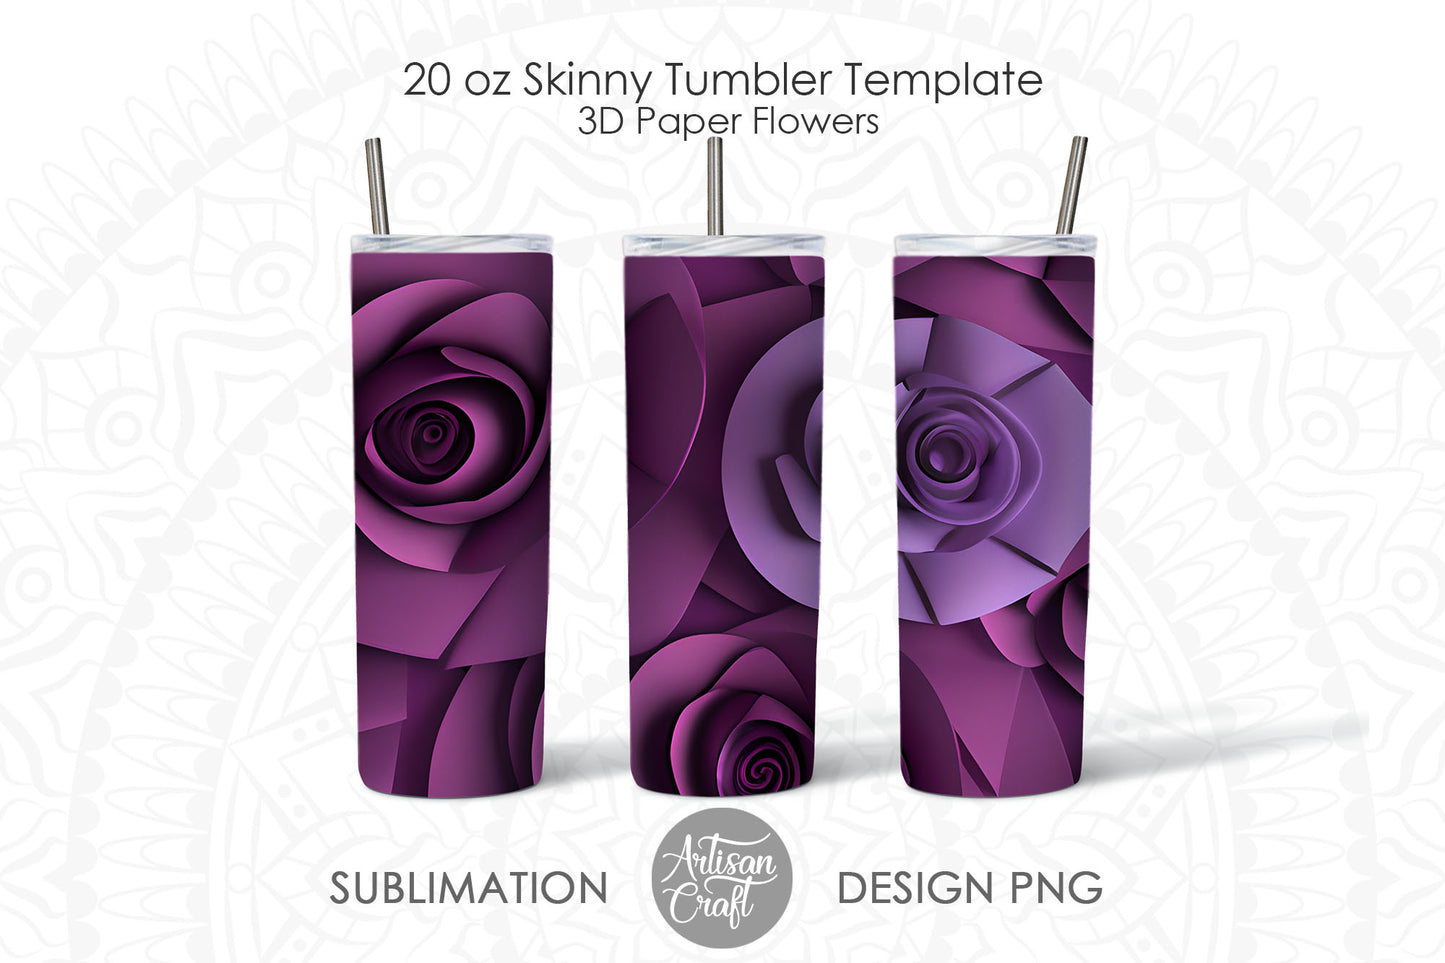 3D flowers tumbler wrap for 20oz Skinny Tumbler sublimation